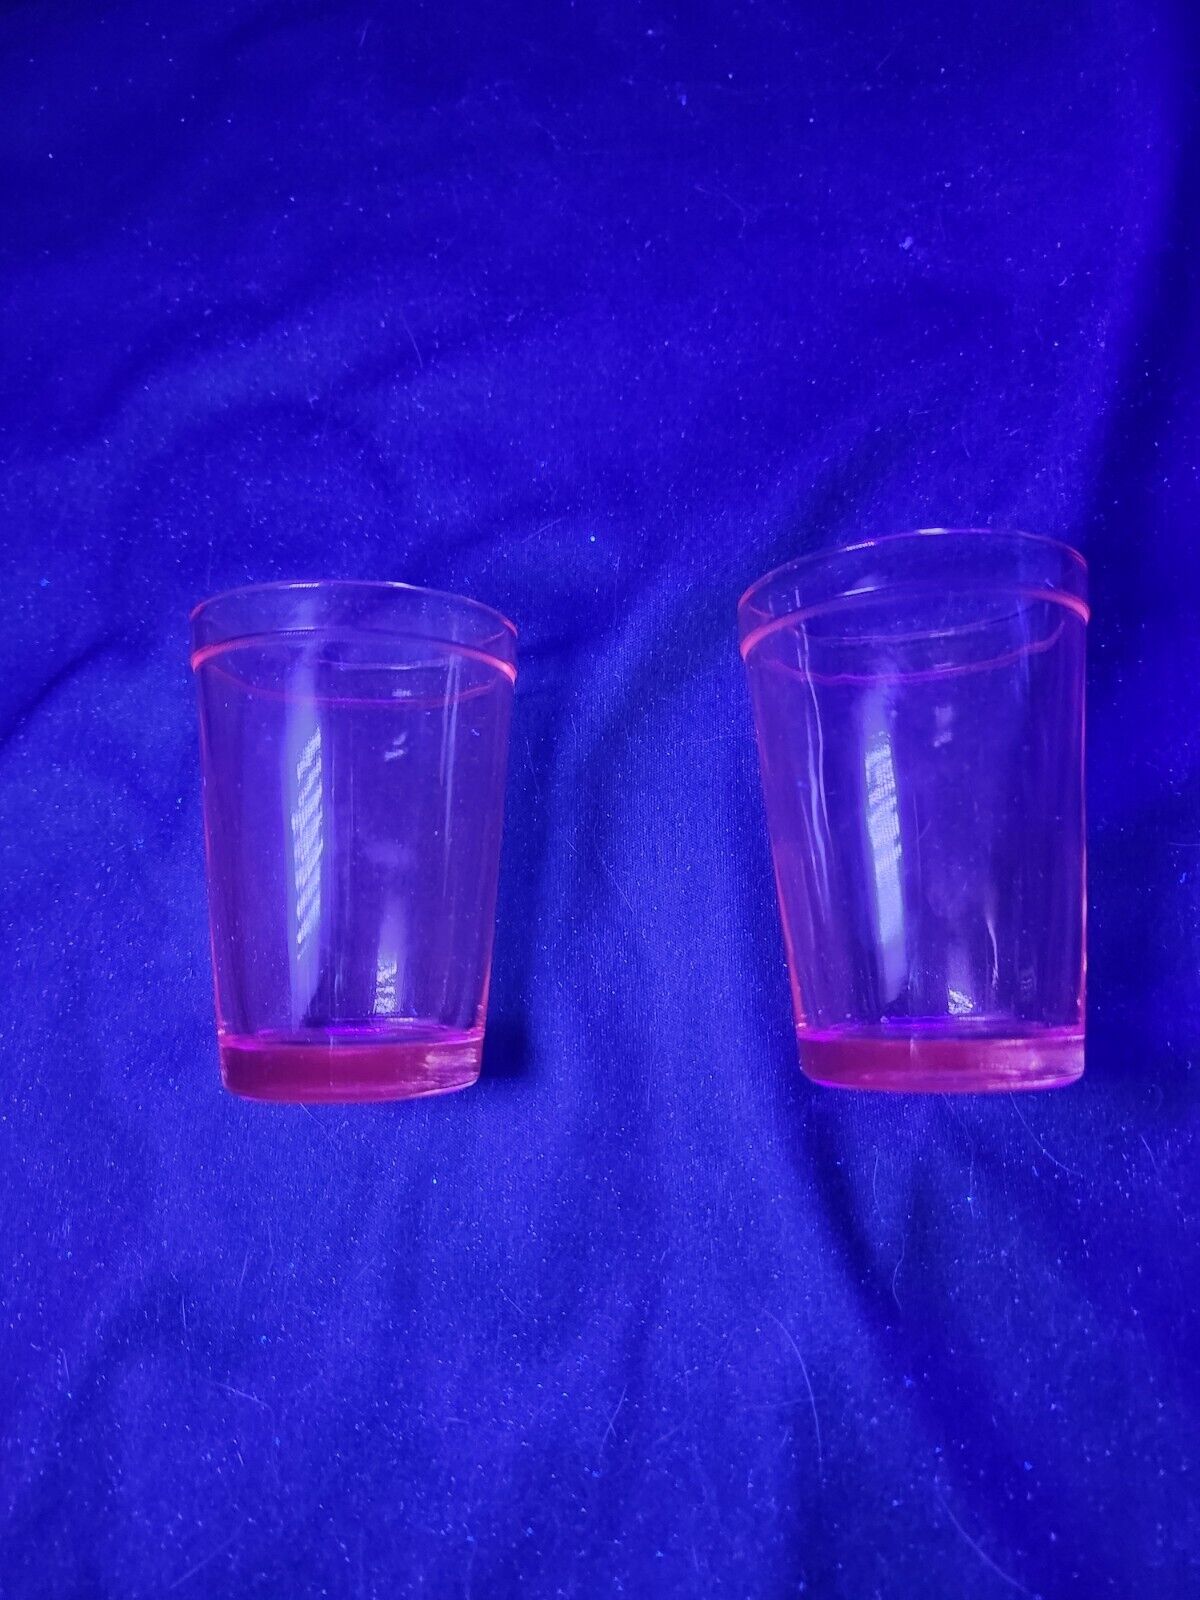 Childrens Pink Depression Glass Cups Set Of 2 Selenium Glow Under 365nm UV Light